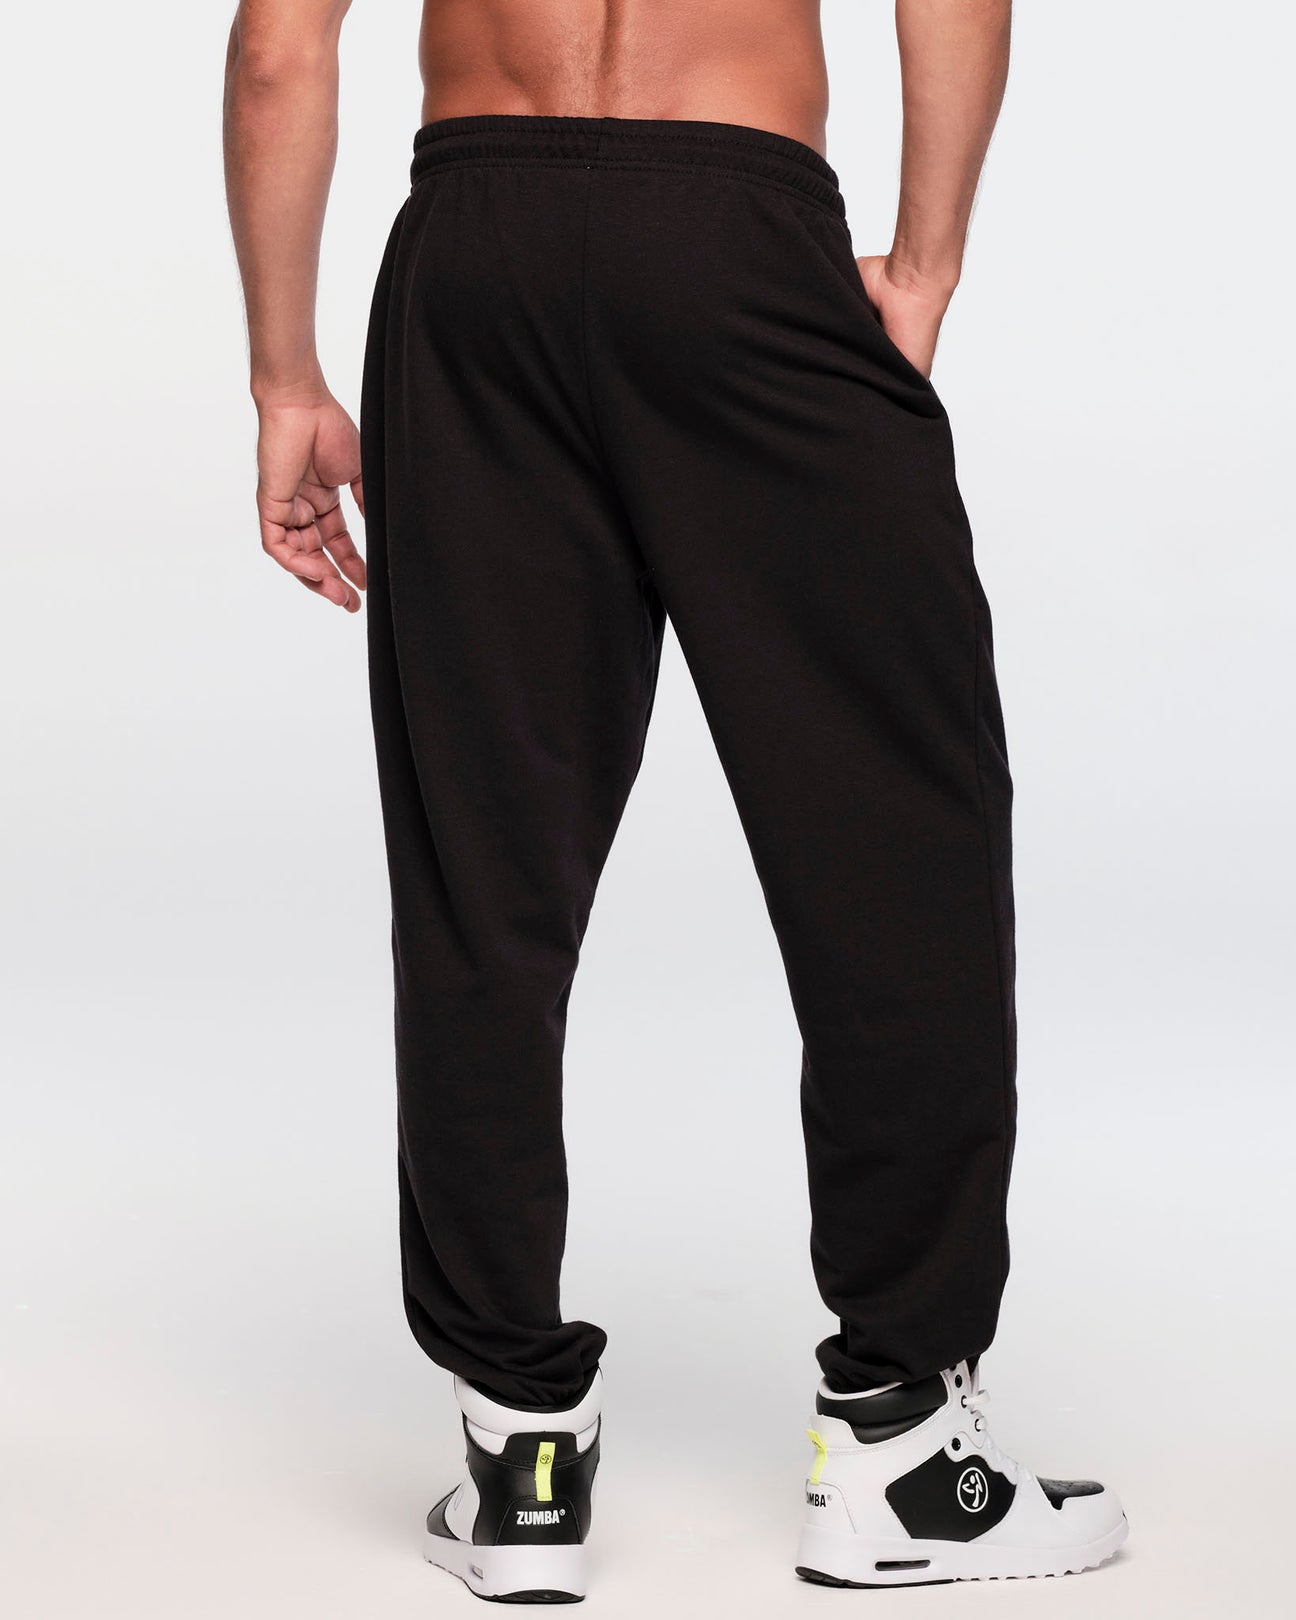 Adidas vintage 90's black baggy track pants | Shapiro Selective